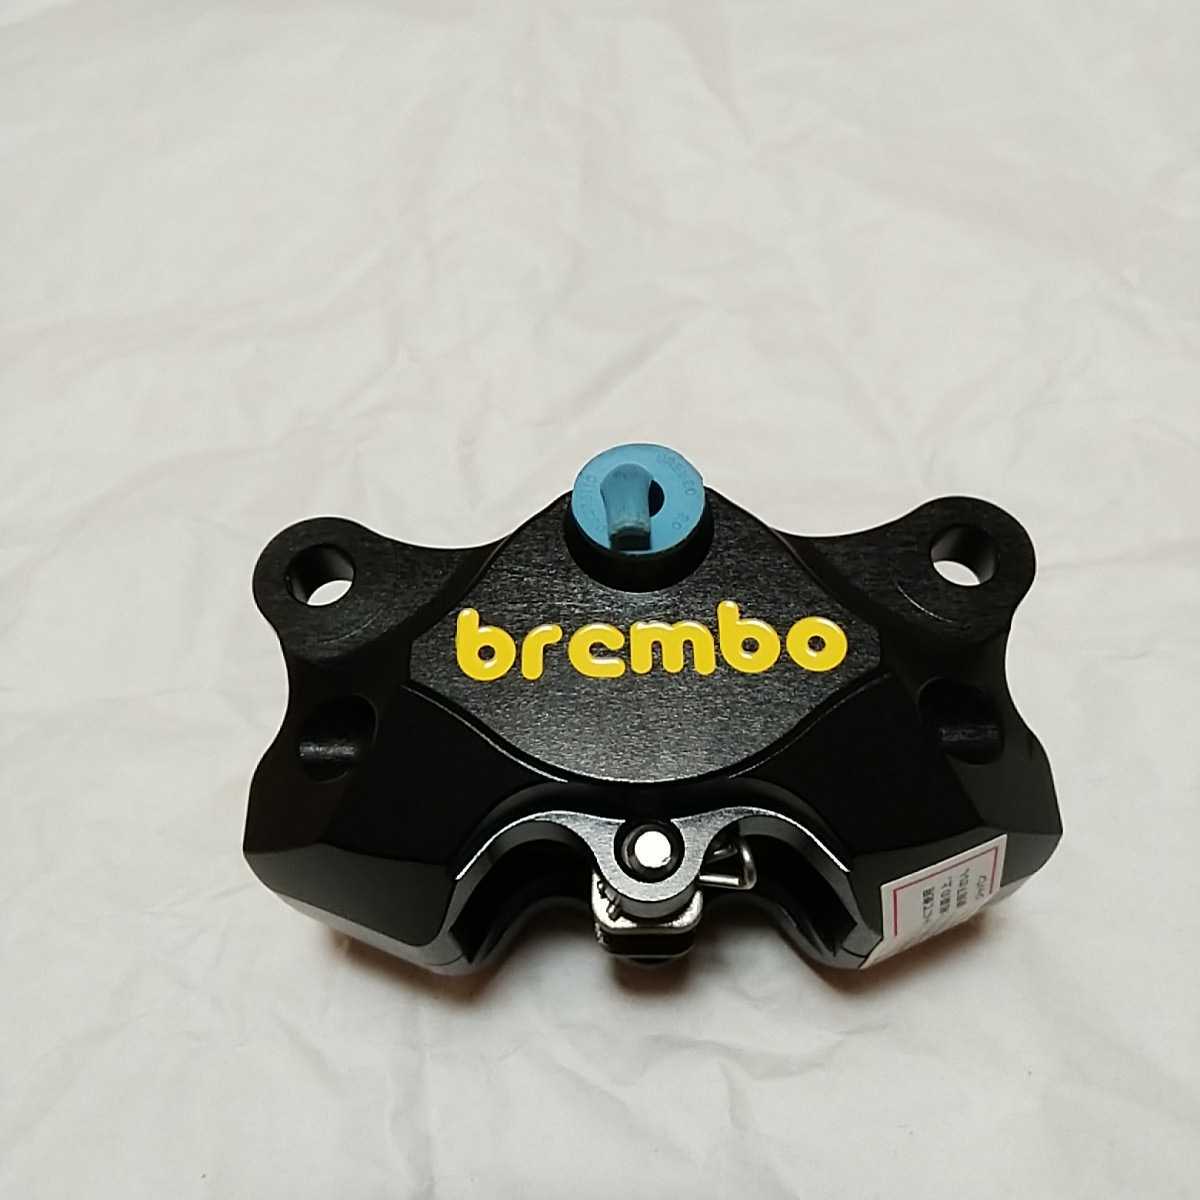 brembo 2pot キャリパーの価格比較 - みんカラ